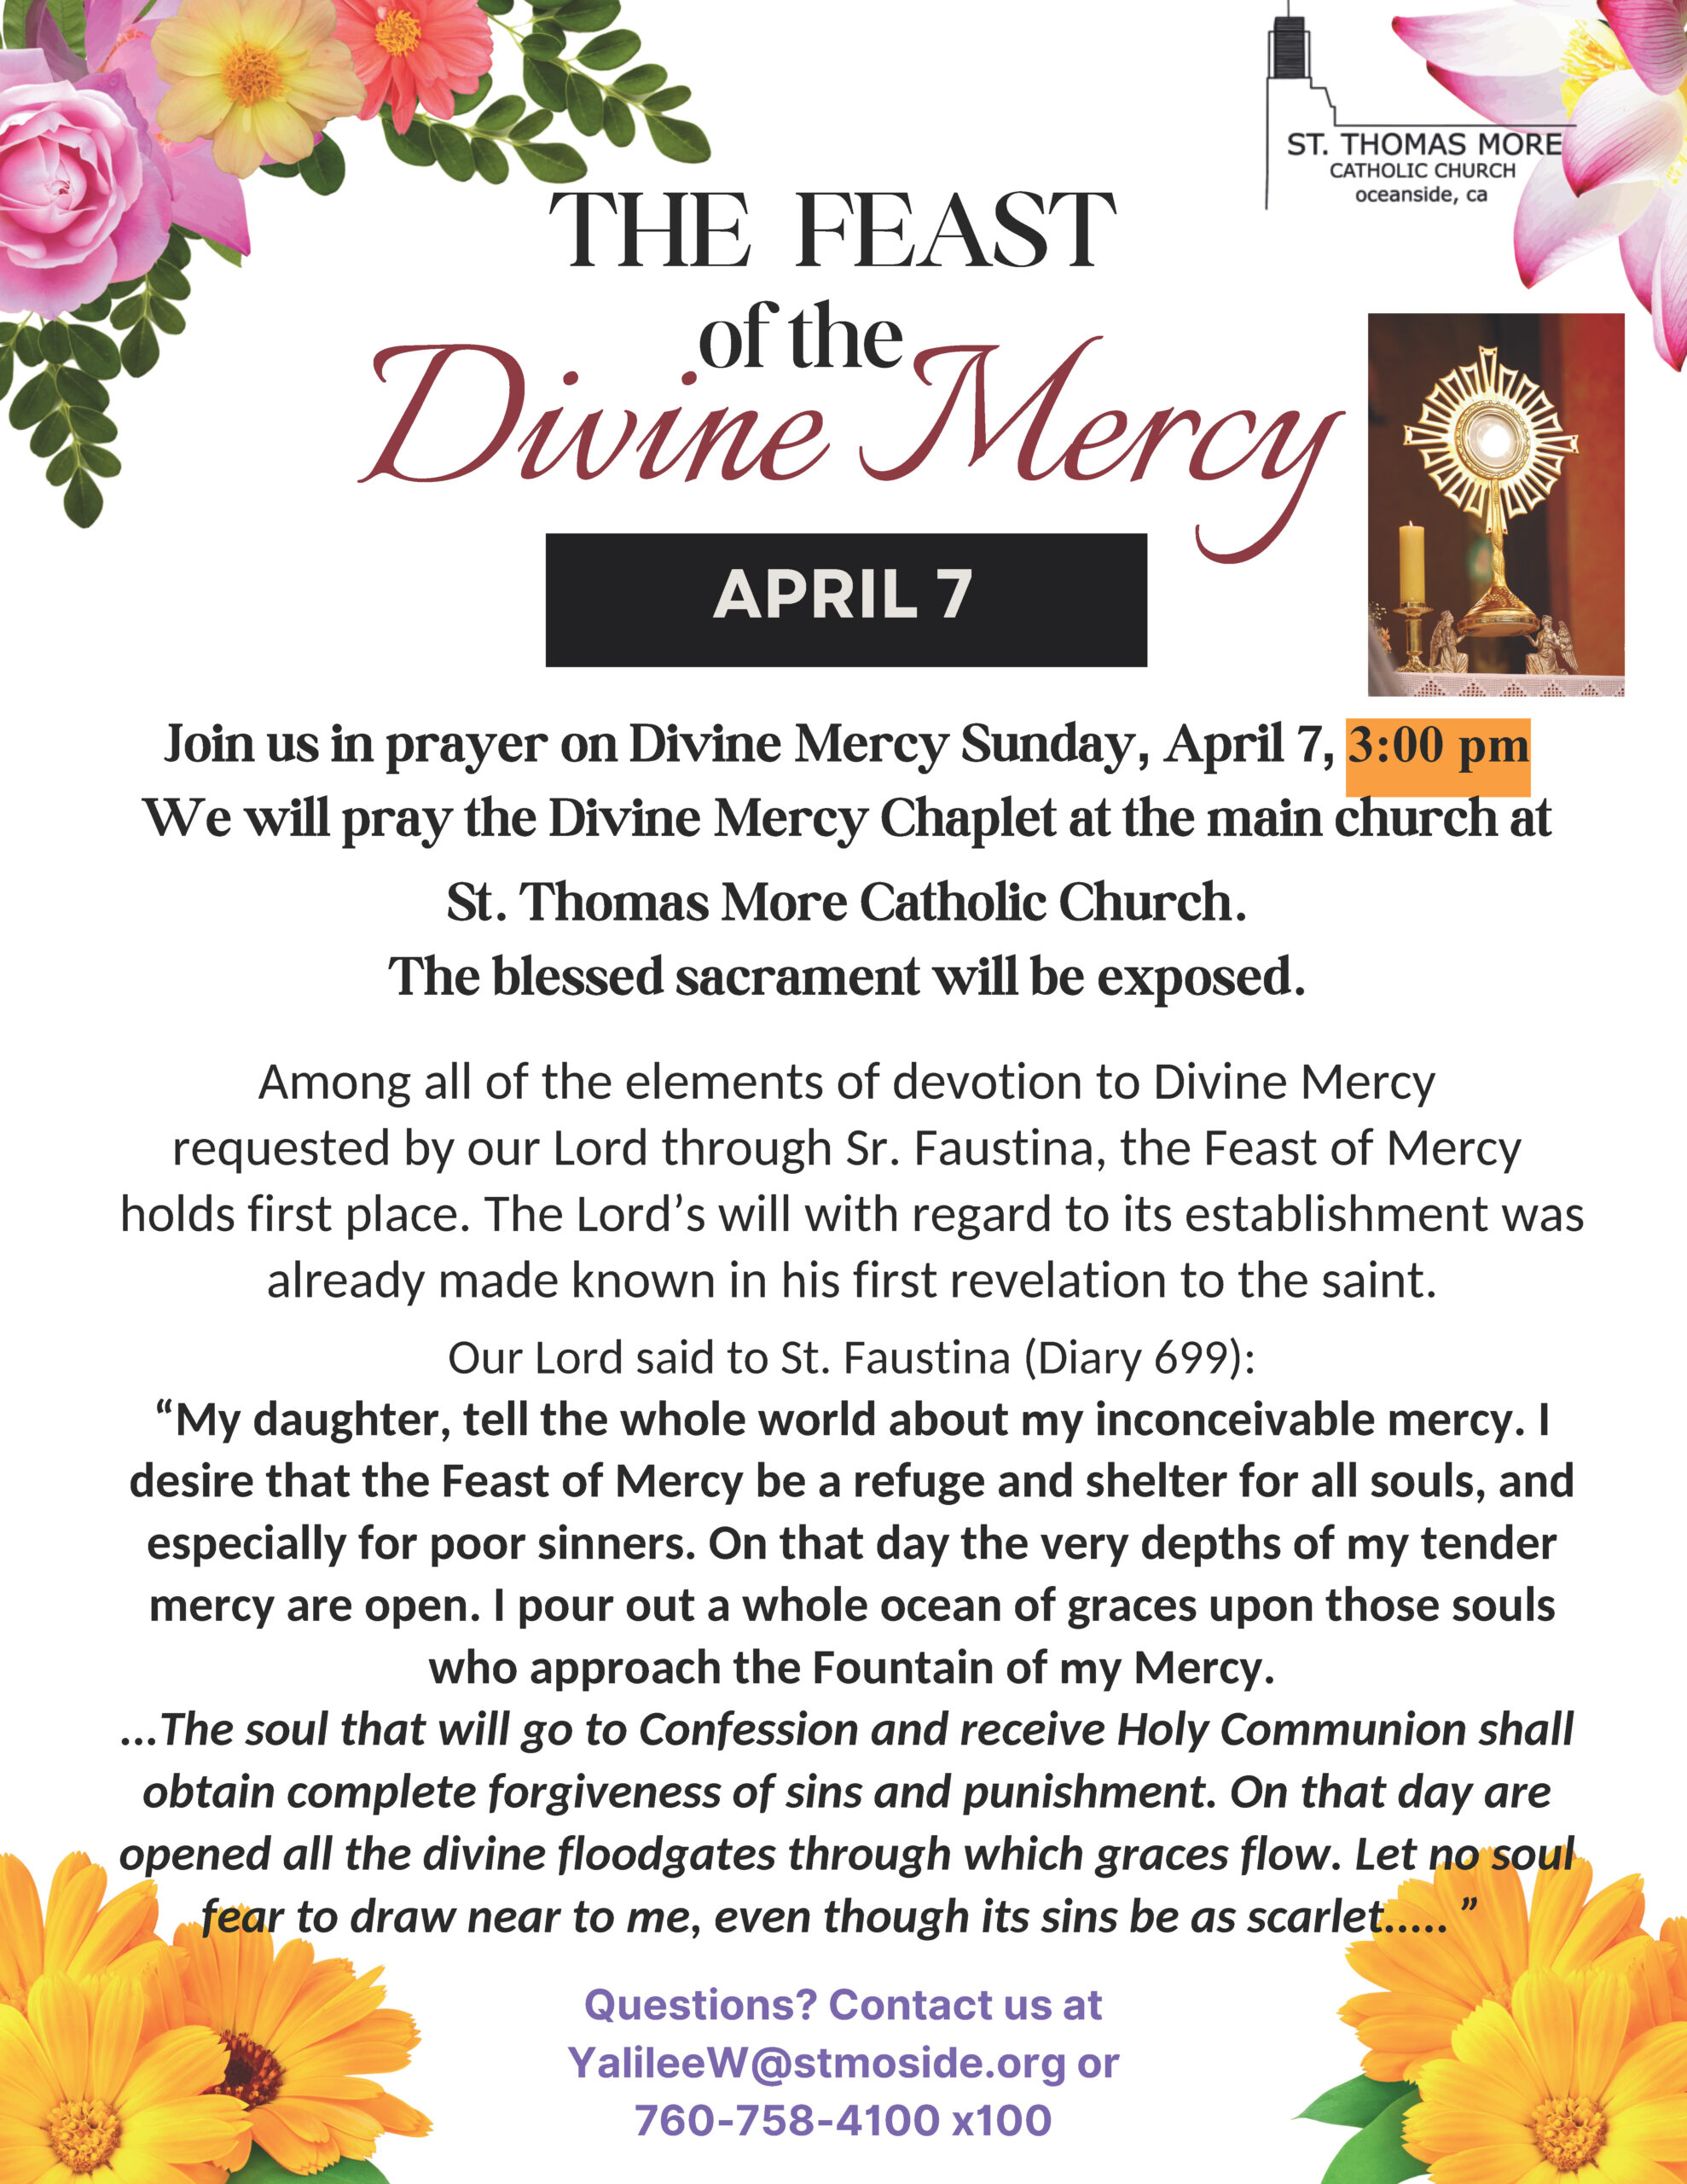 Join us for Divine Mercy Sunday Prayer